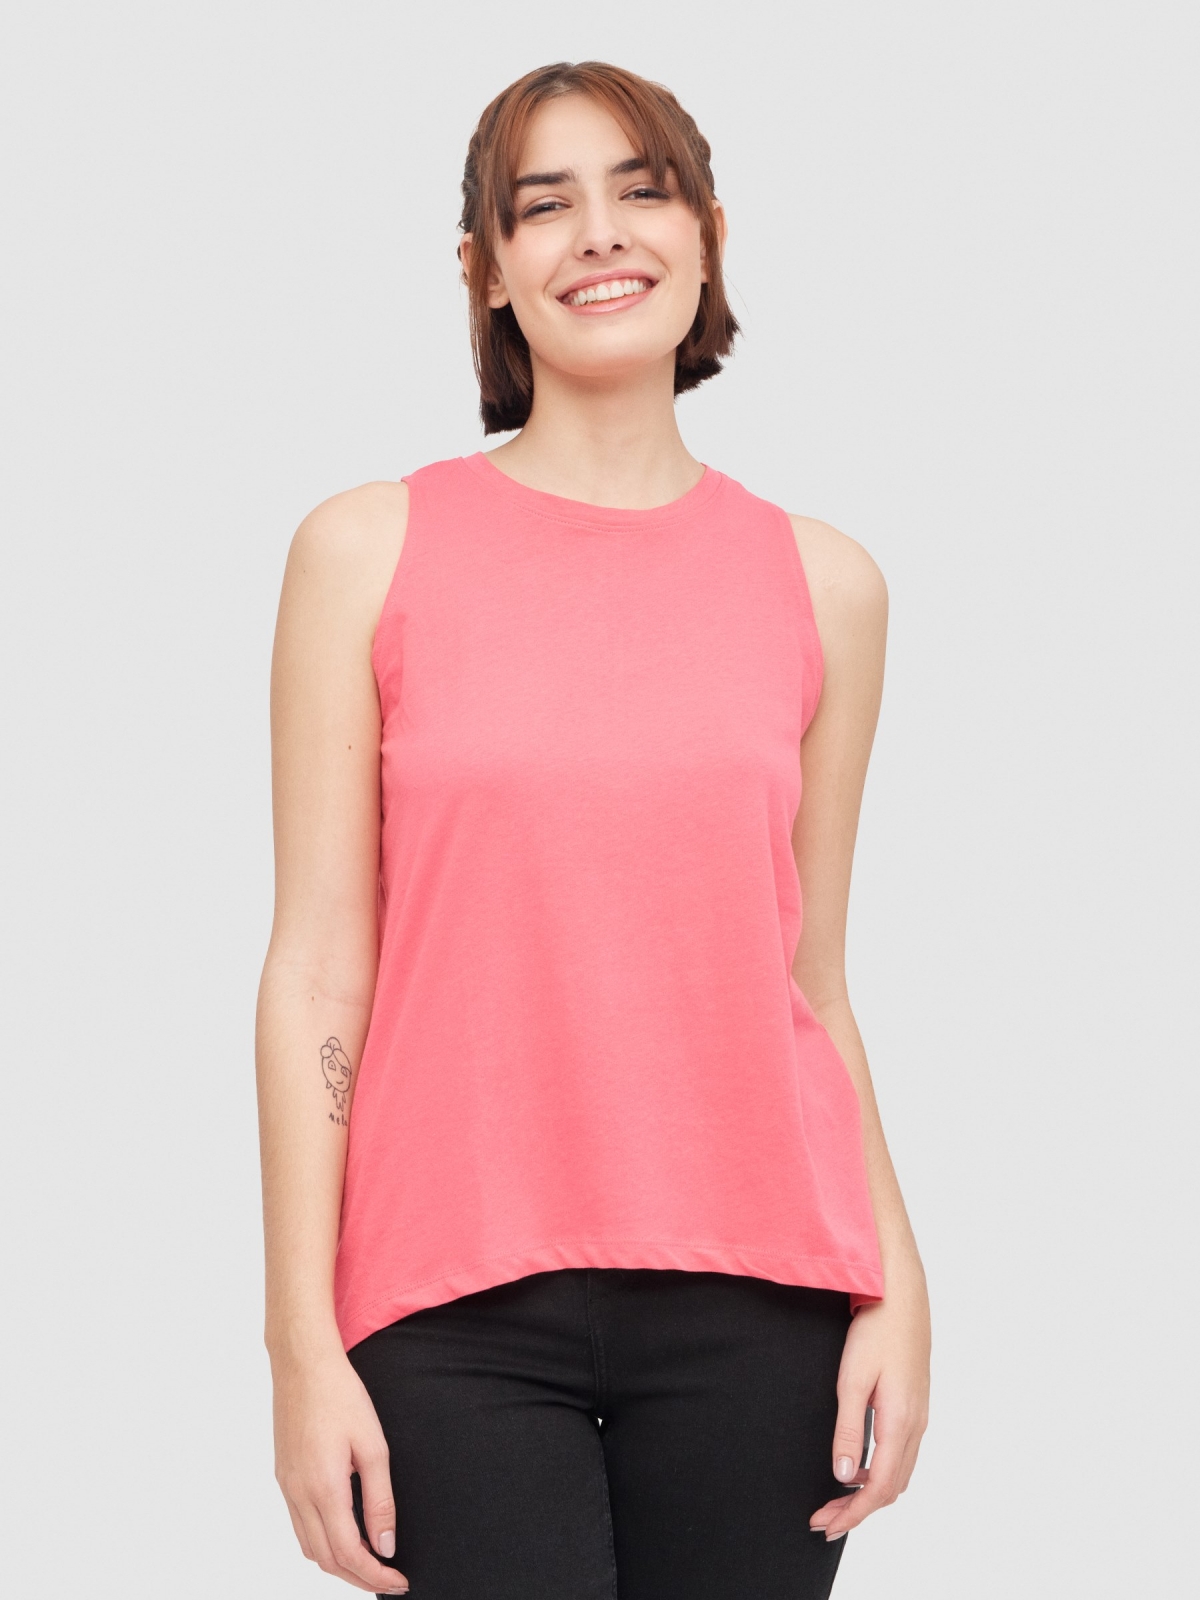 Camiseta abertura espalda rosa vista media frontal